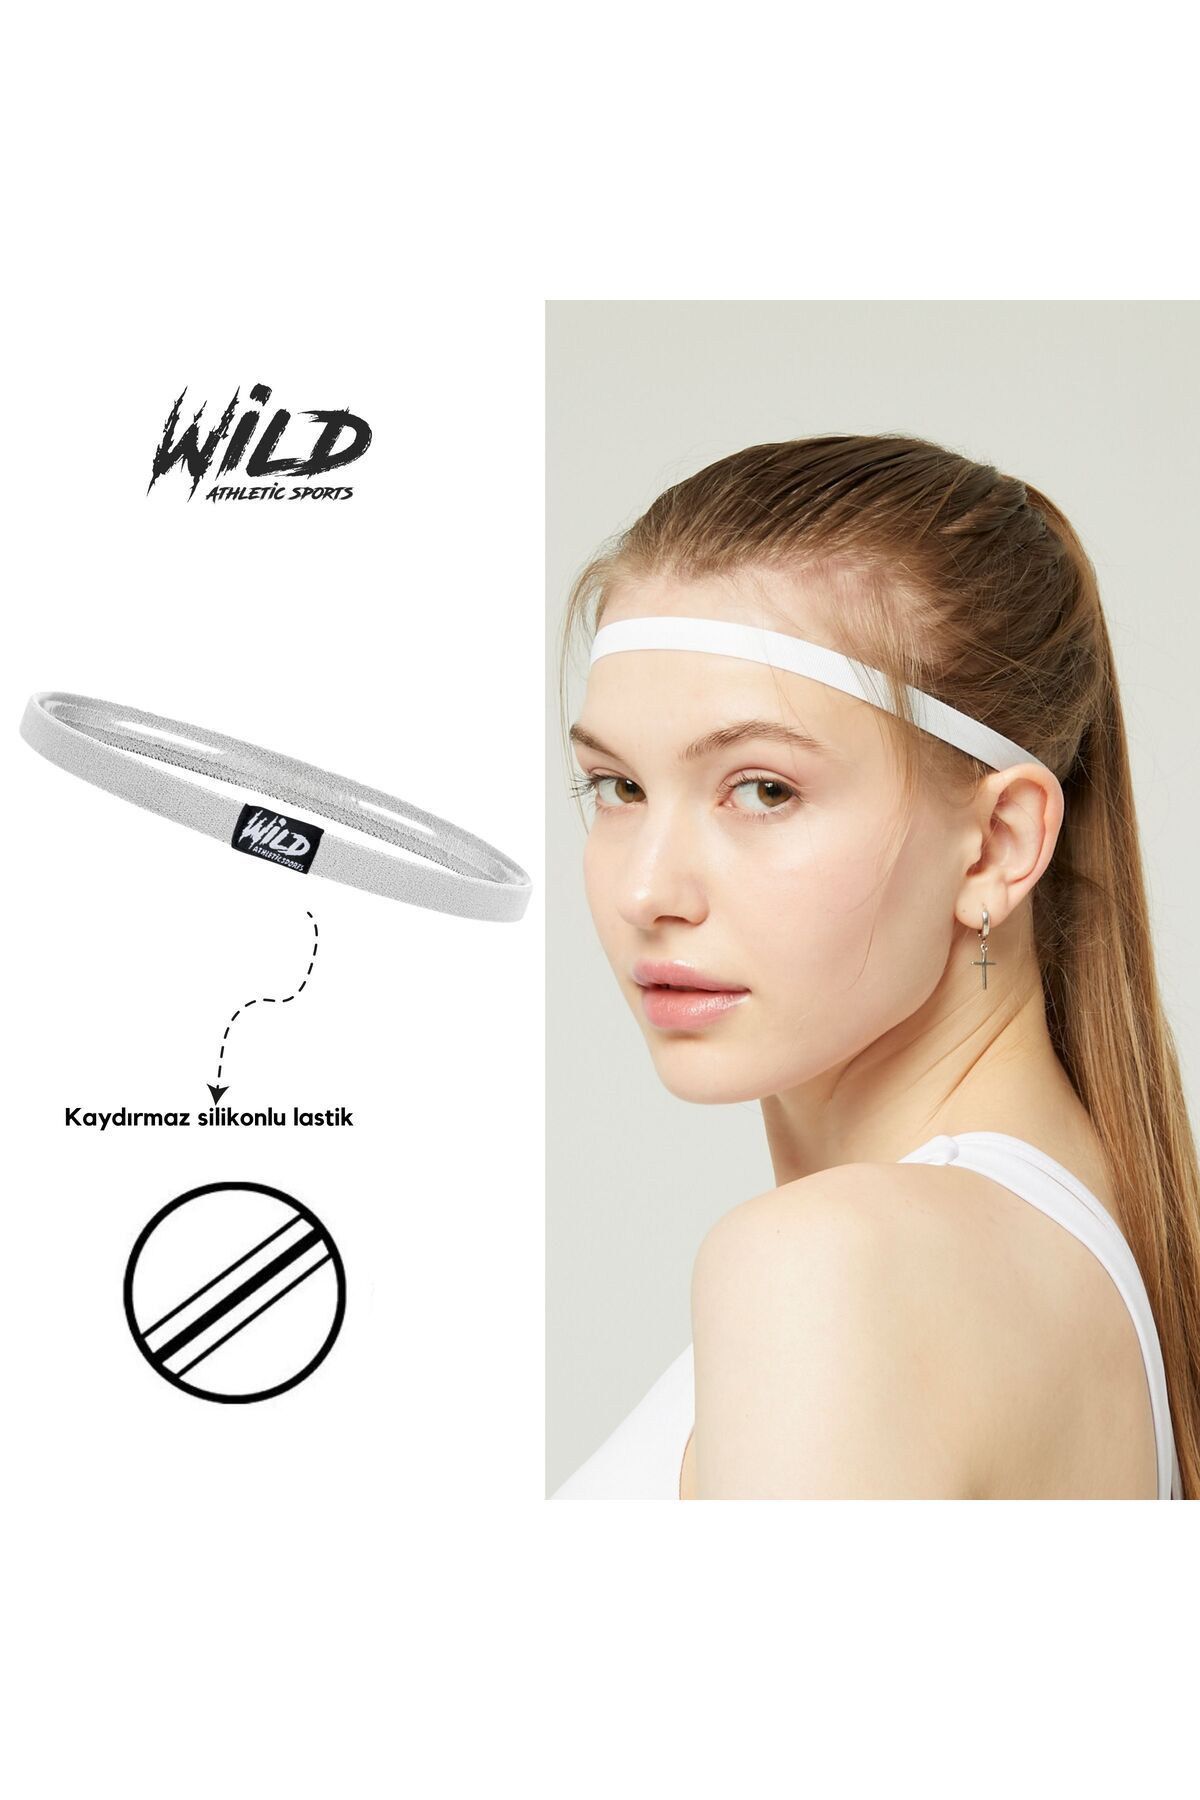 Wild Athletic Sports Kaydırmaz Beyaz Spor Elastik Saç Bandı Tokası Wildflex